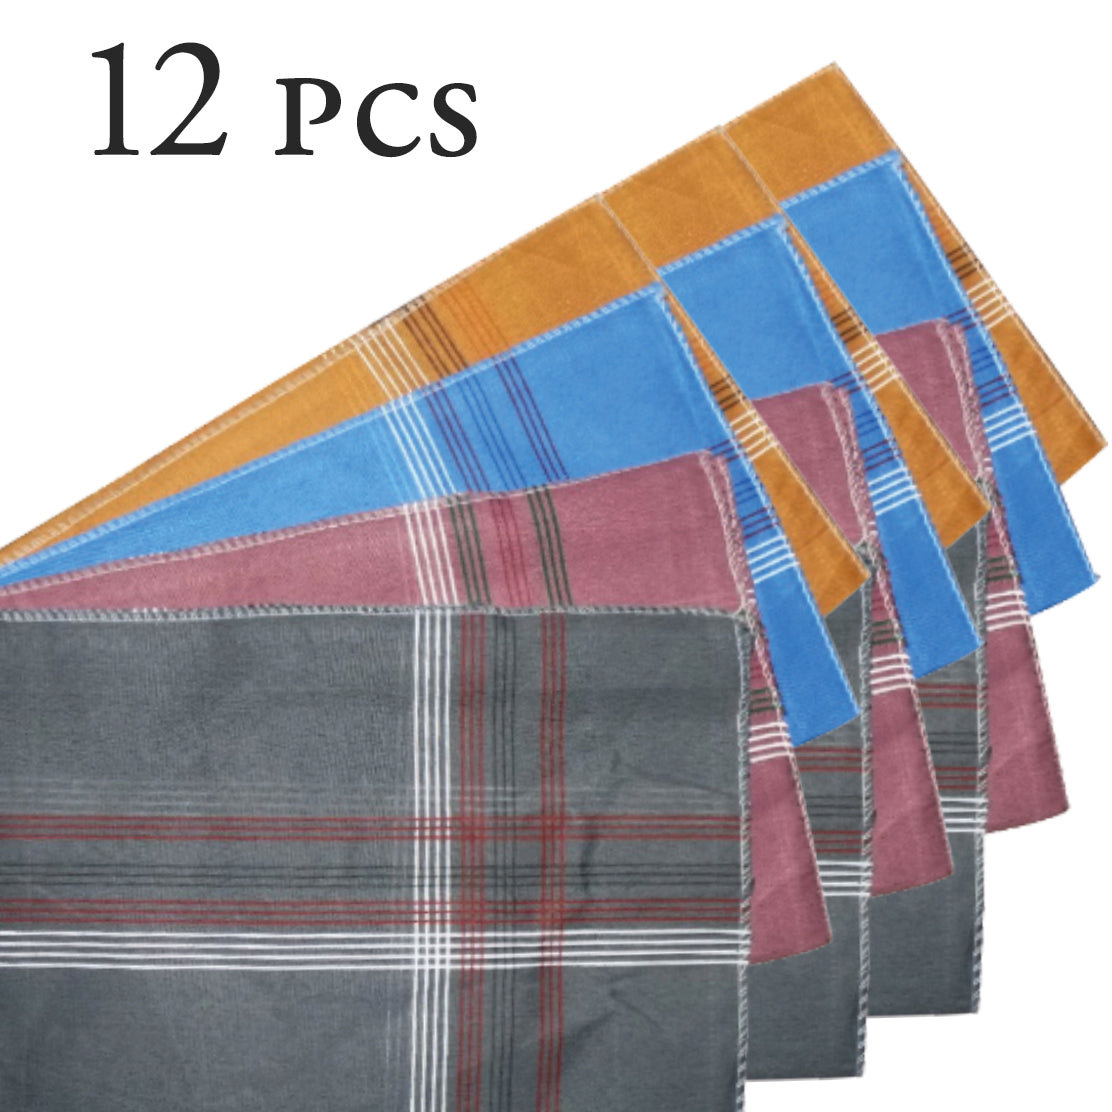 1532 Men's King Size Formal Handkerchiefs for Office Use - Pack of 12 DeoDap